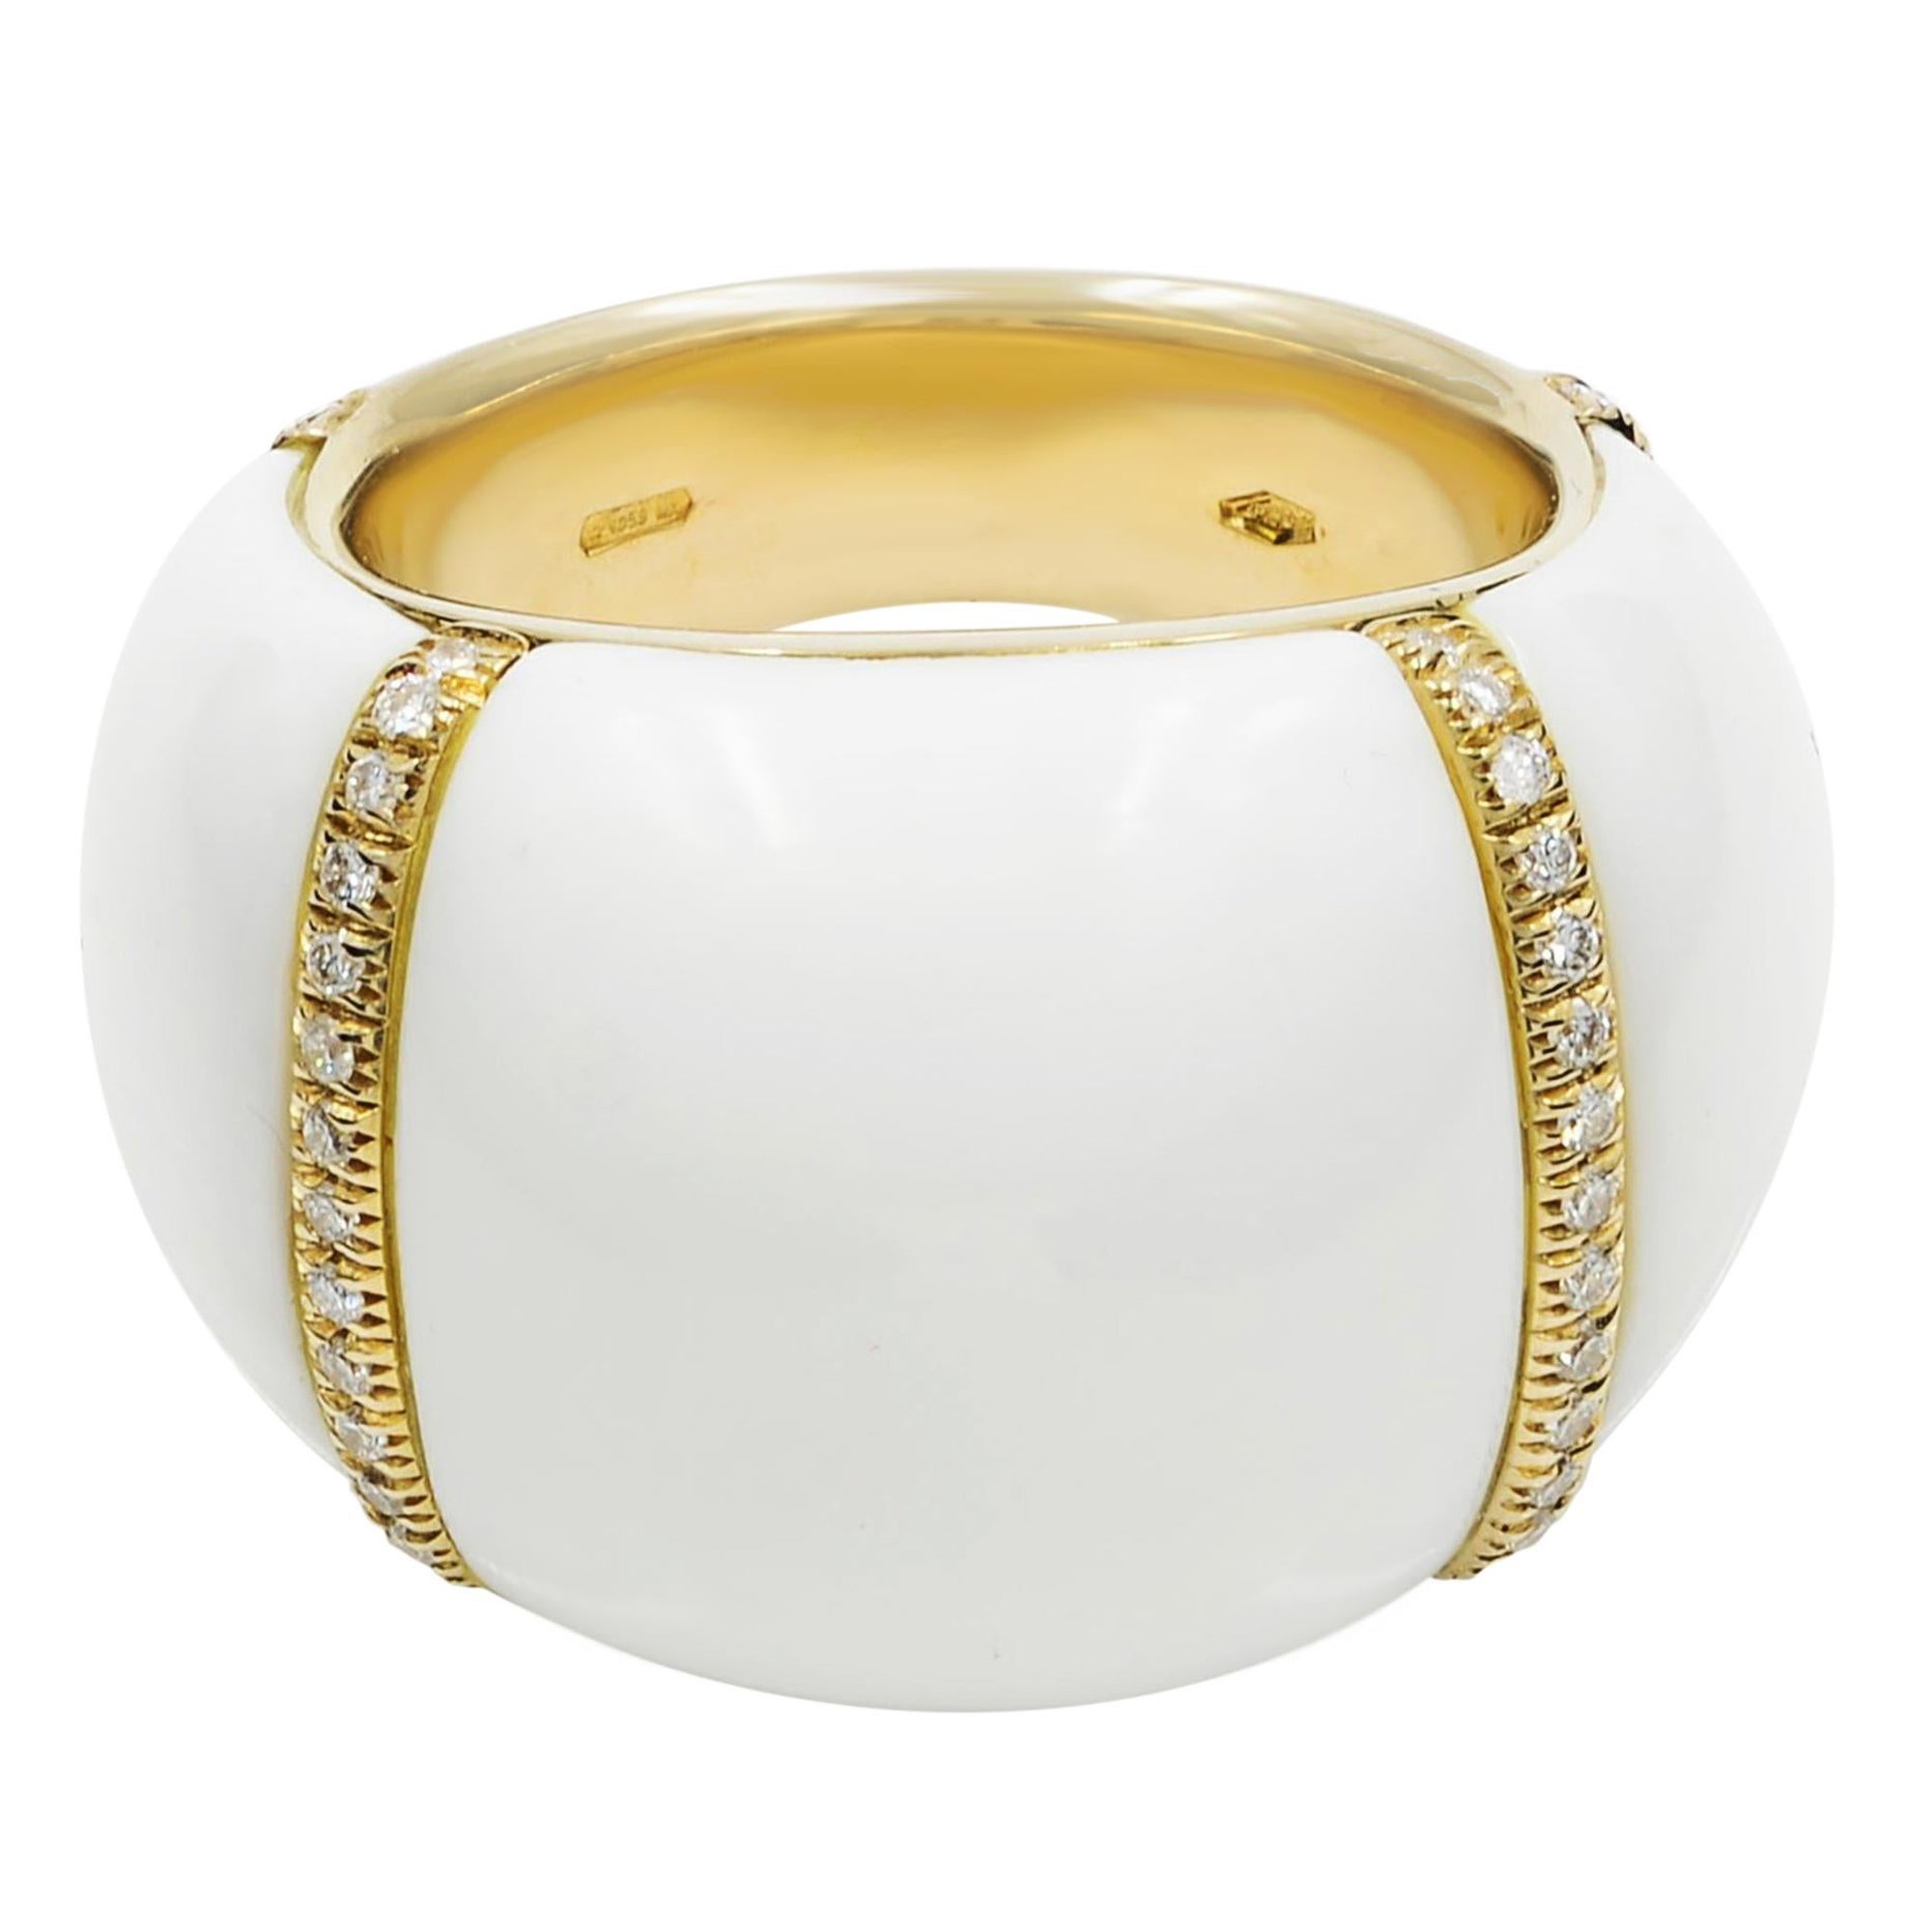 Chantecler White Ceramic Diamond Dome Shaped Ring 18K Yellow Gold 0.50ctw Size 7